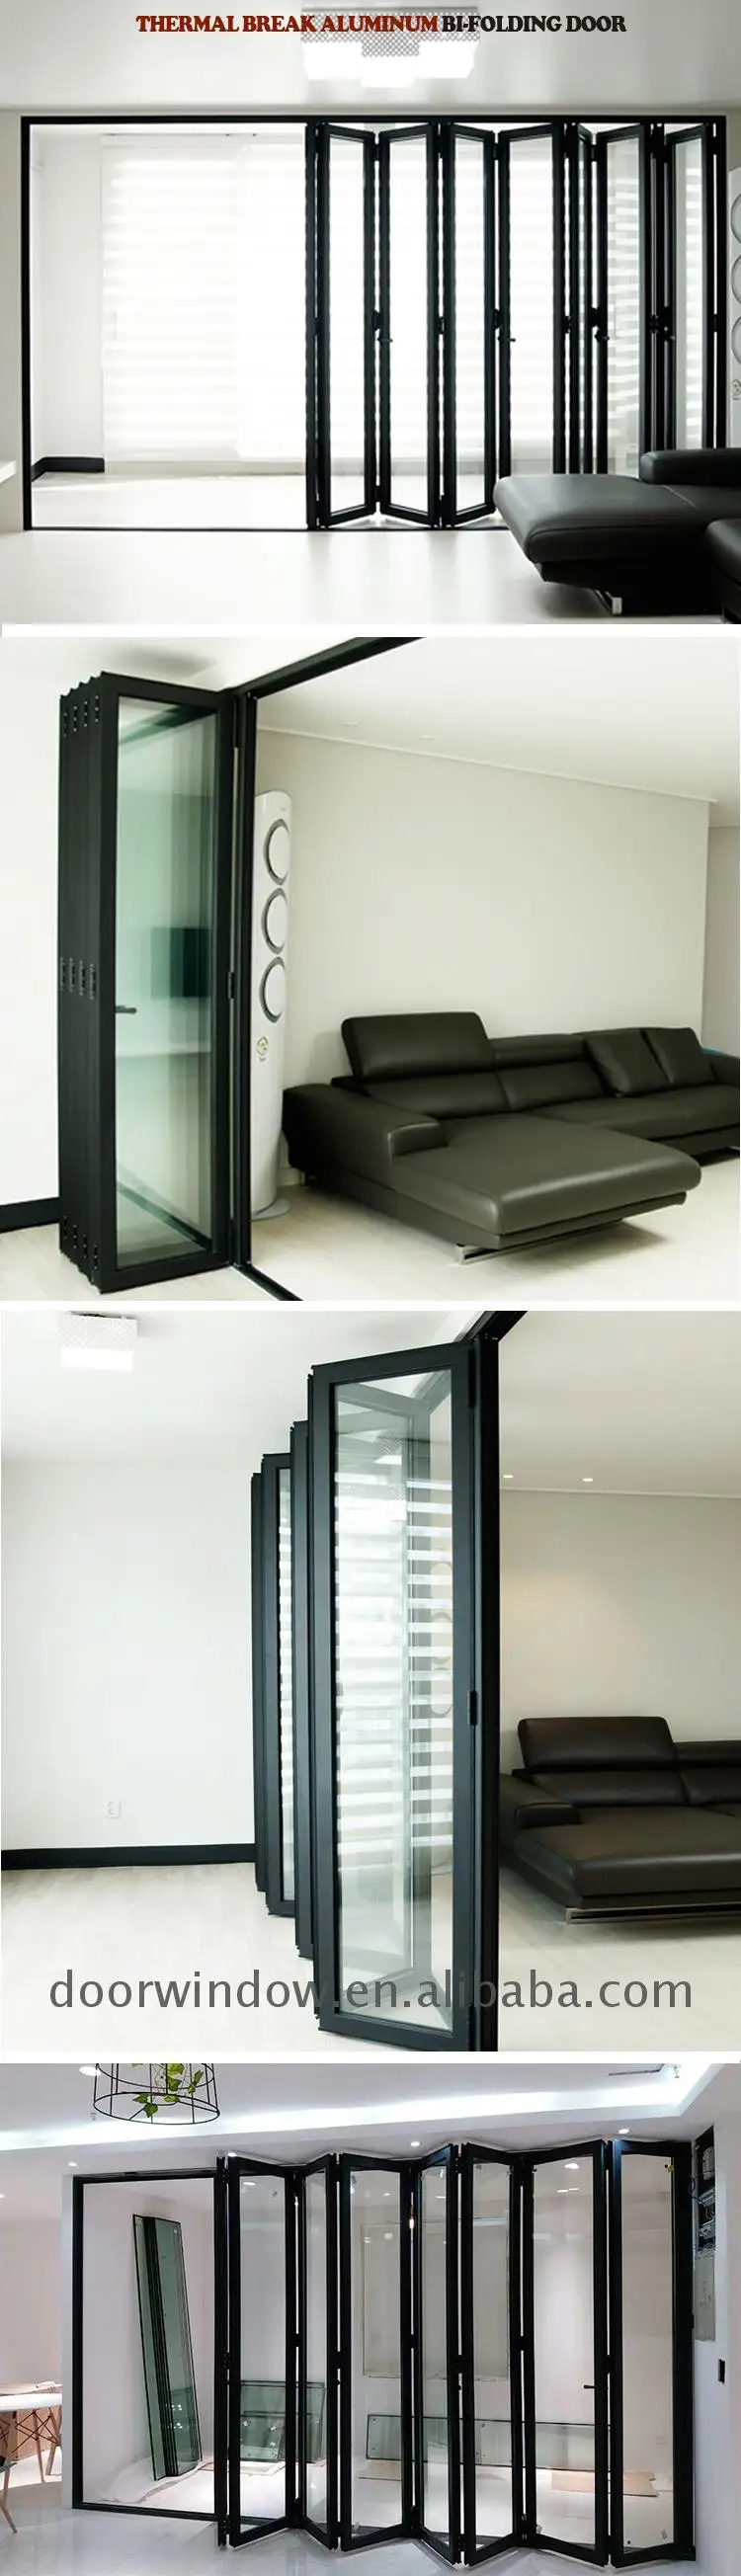 Energy saving america standard aluminium bi-fold windows double glazed folding patio doors